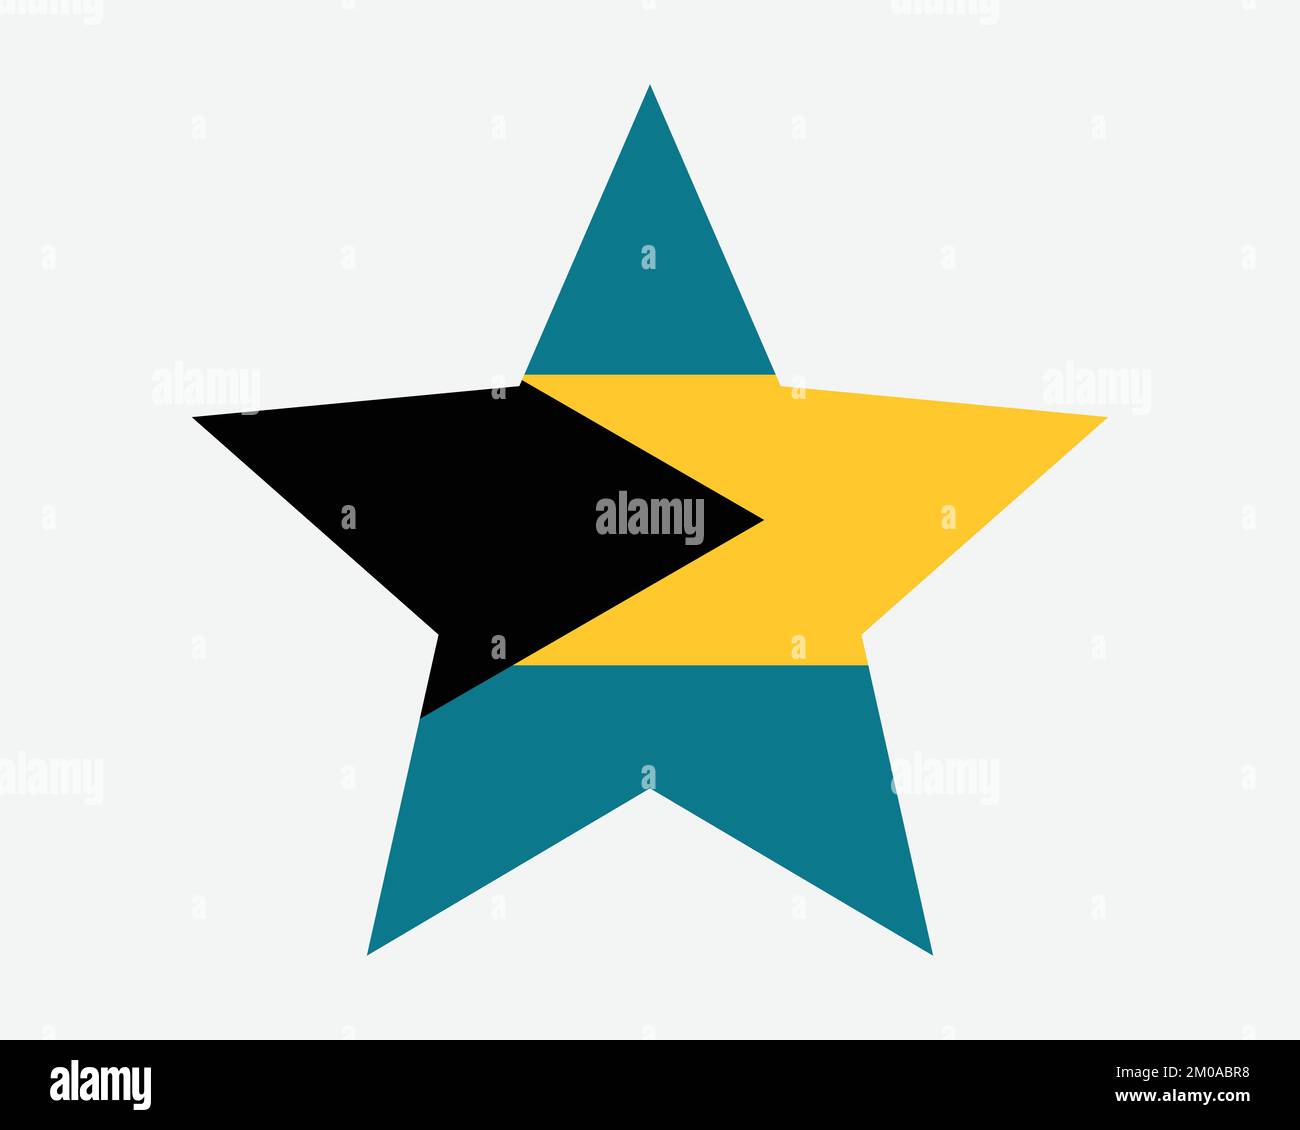 The Bahamas Star Flag. Bahamian Star Shape Flag. Country National Banner Icon Symbol Vector 2D Flat Artwork Graphic Illustration Stock Vector